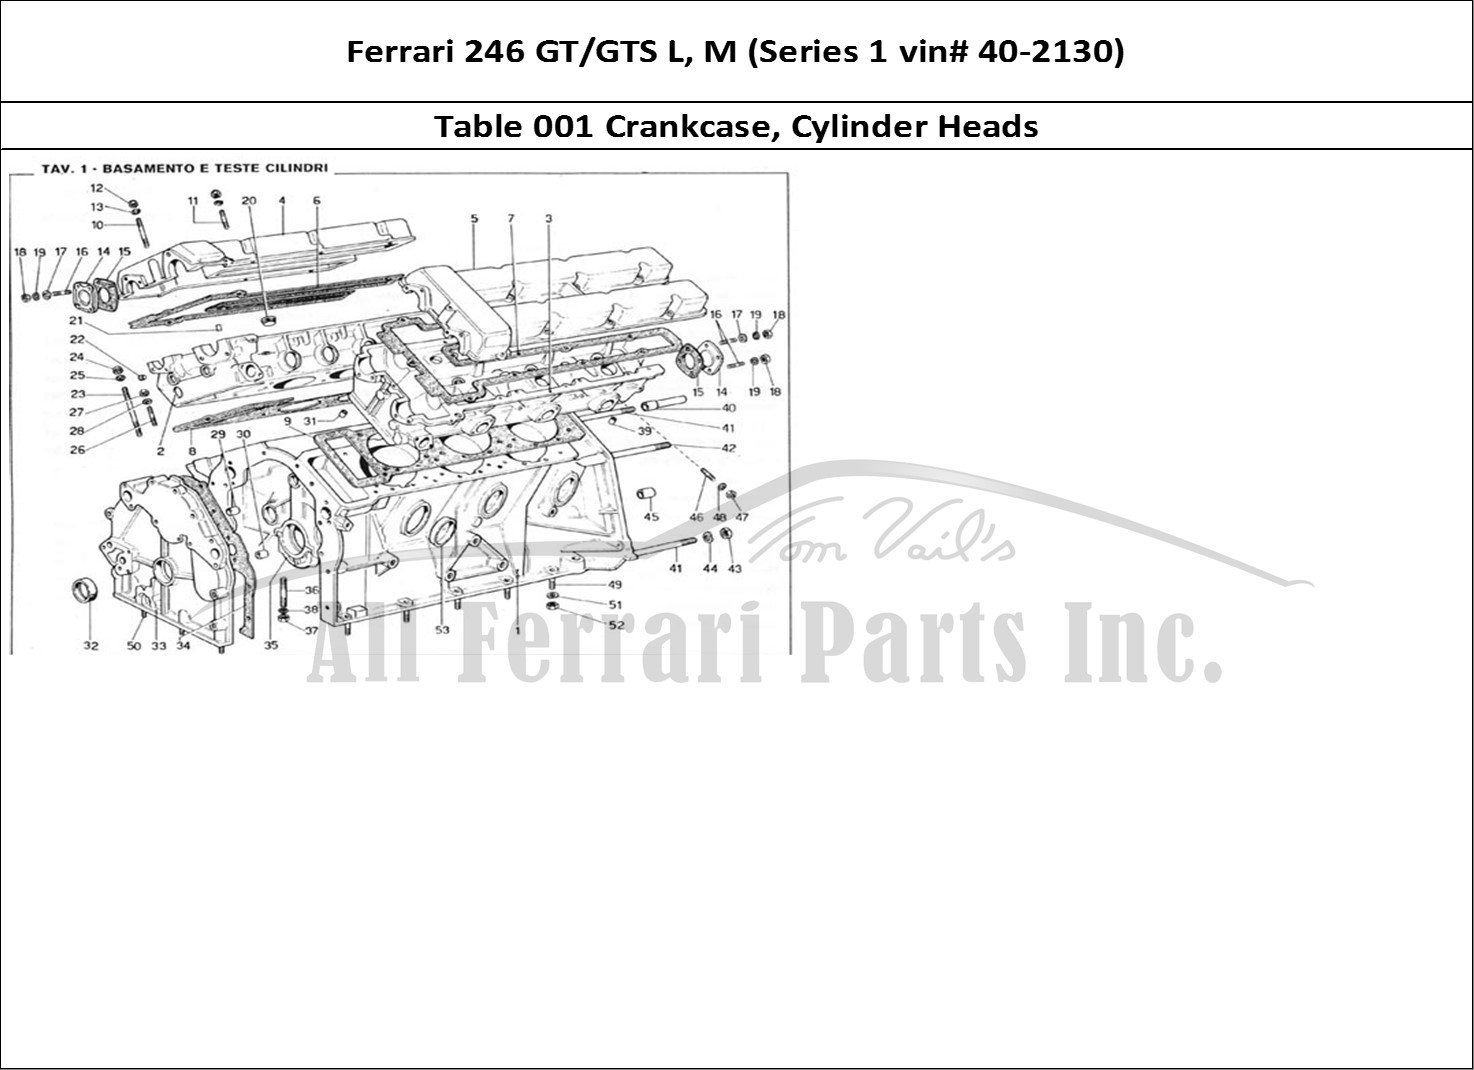 Ferrari Parts Ferrari 246 GT Series 1 Page 001 Crankcase & Cylinder Head